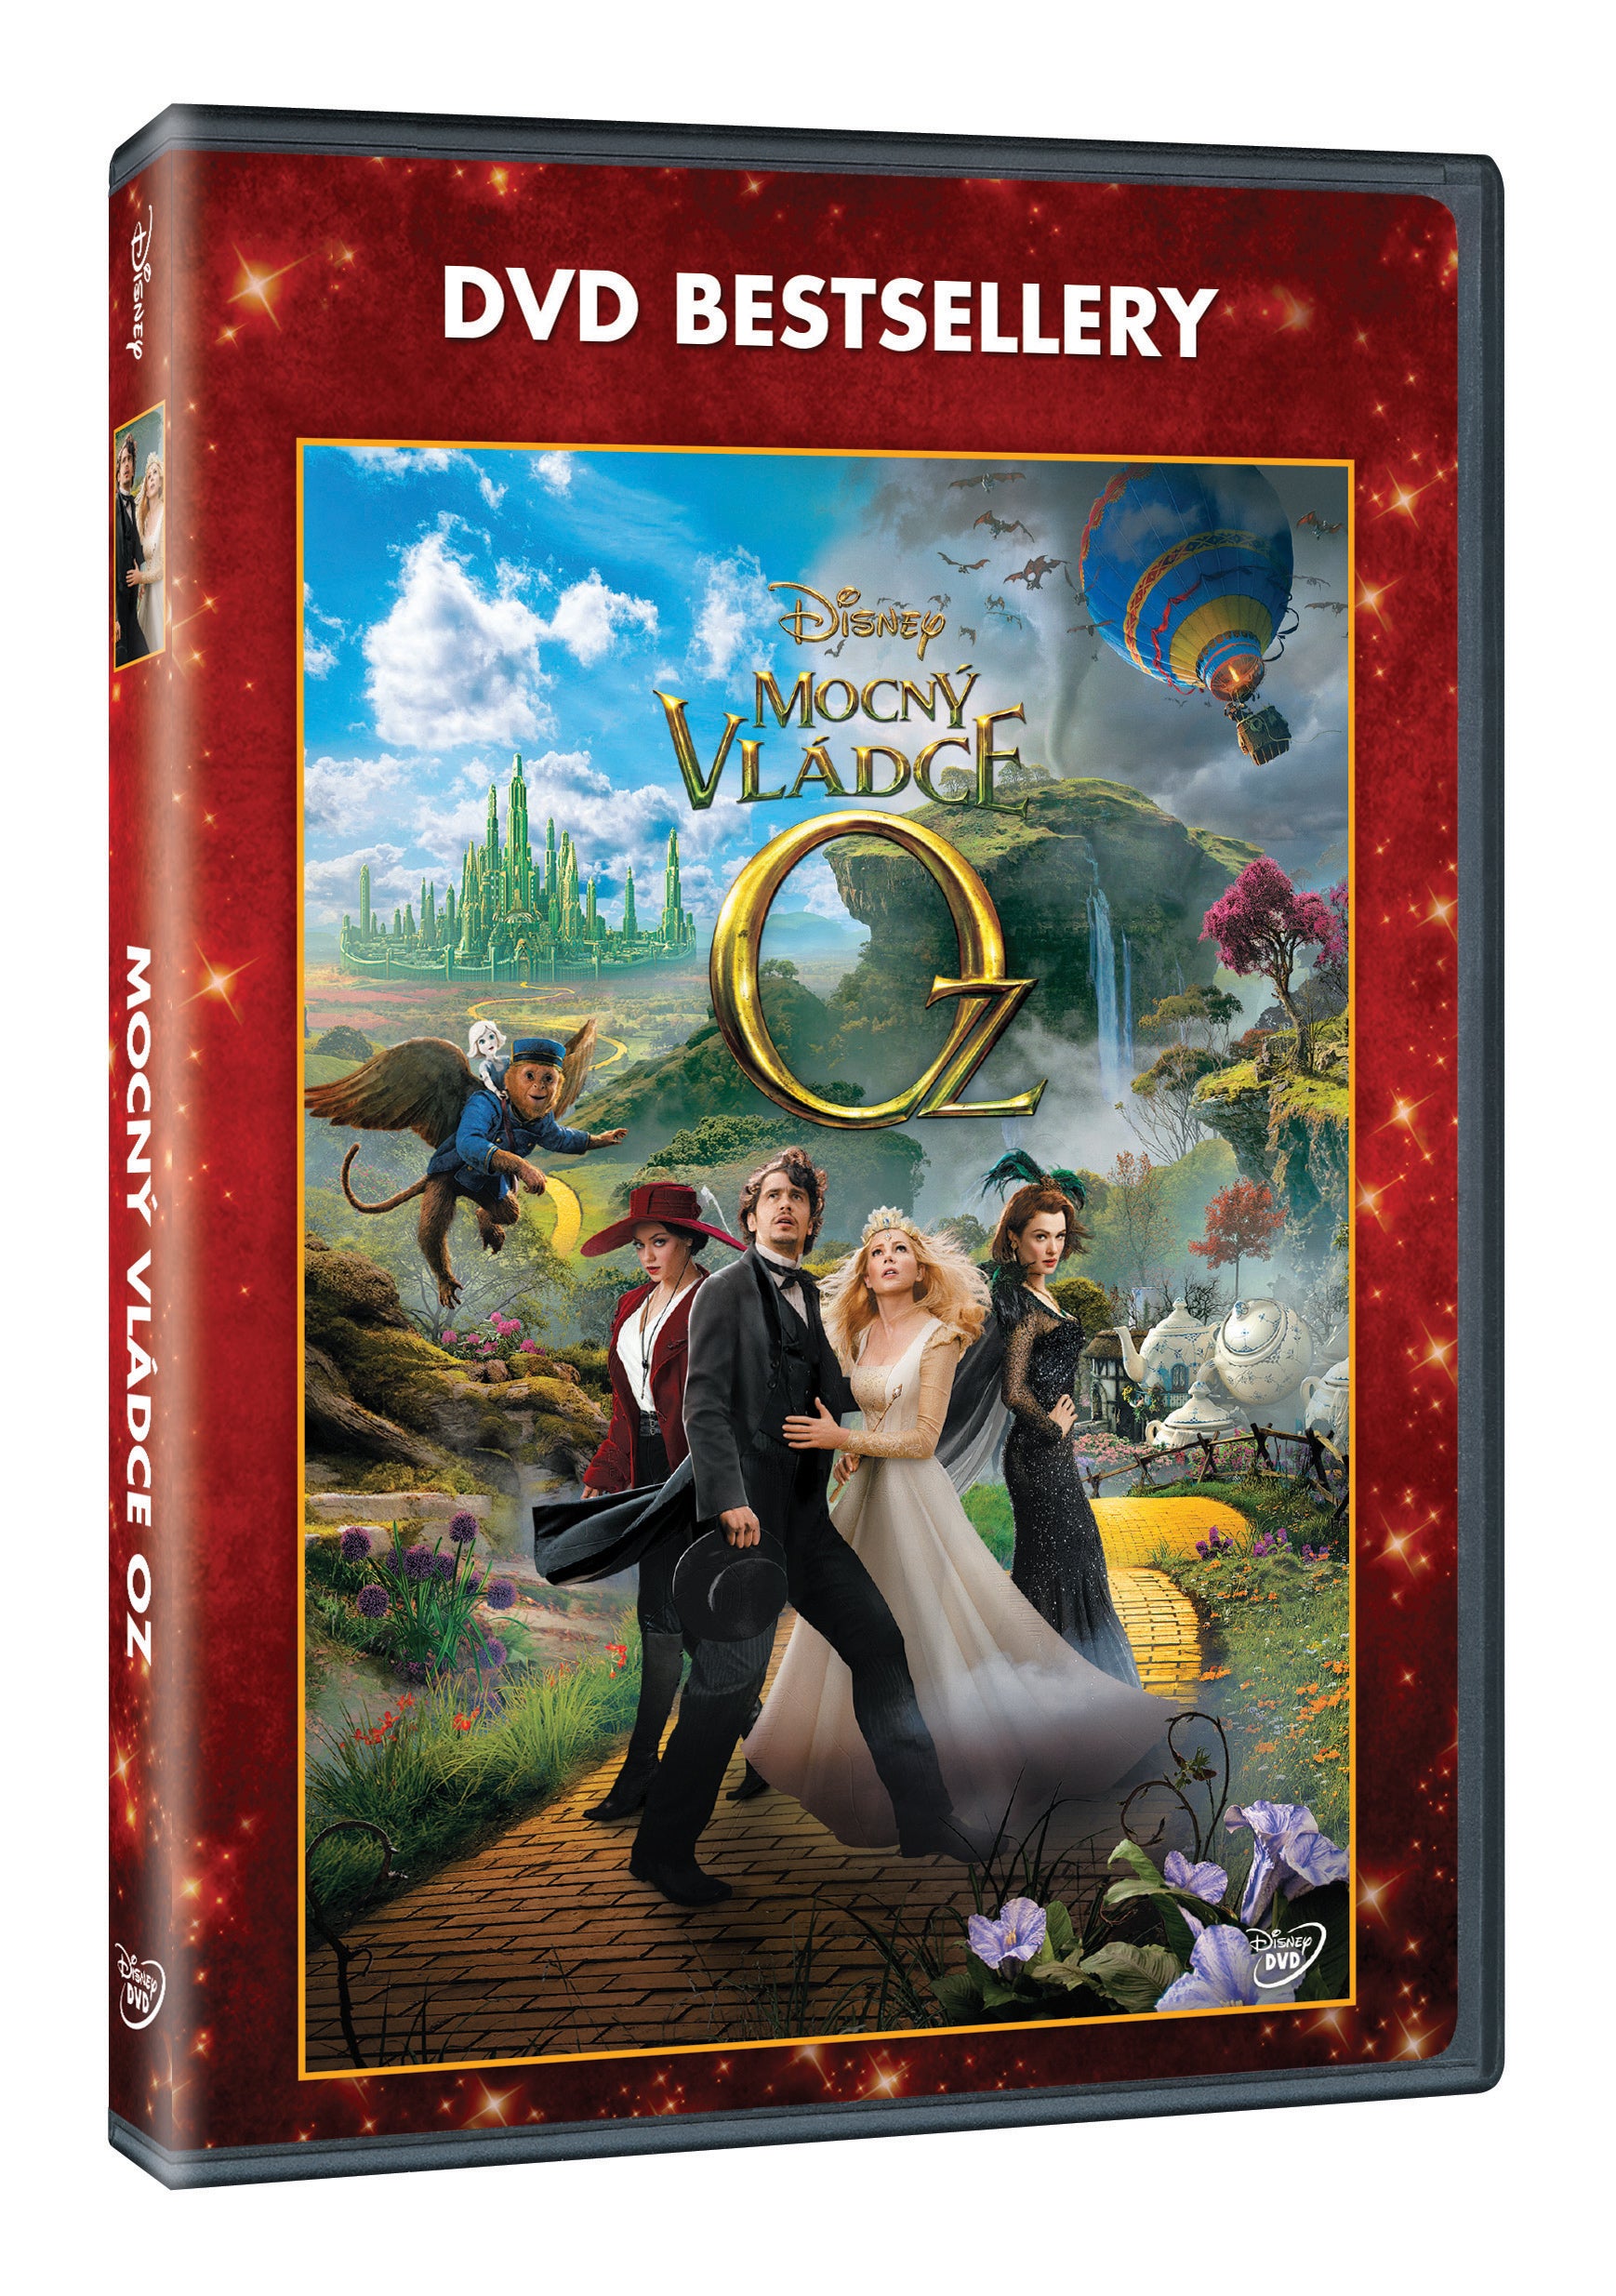 Mocny vladce Oz – DVD-Bestseller (Oz: Der Große und Mächtige)